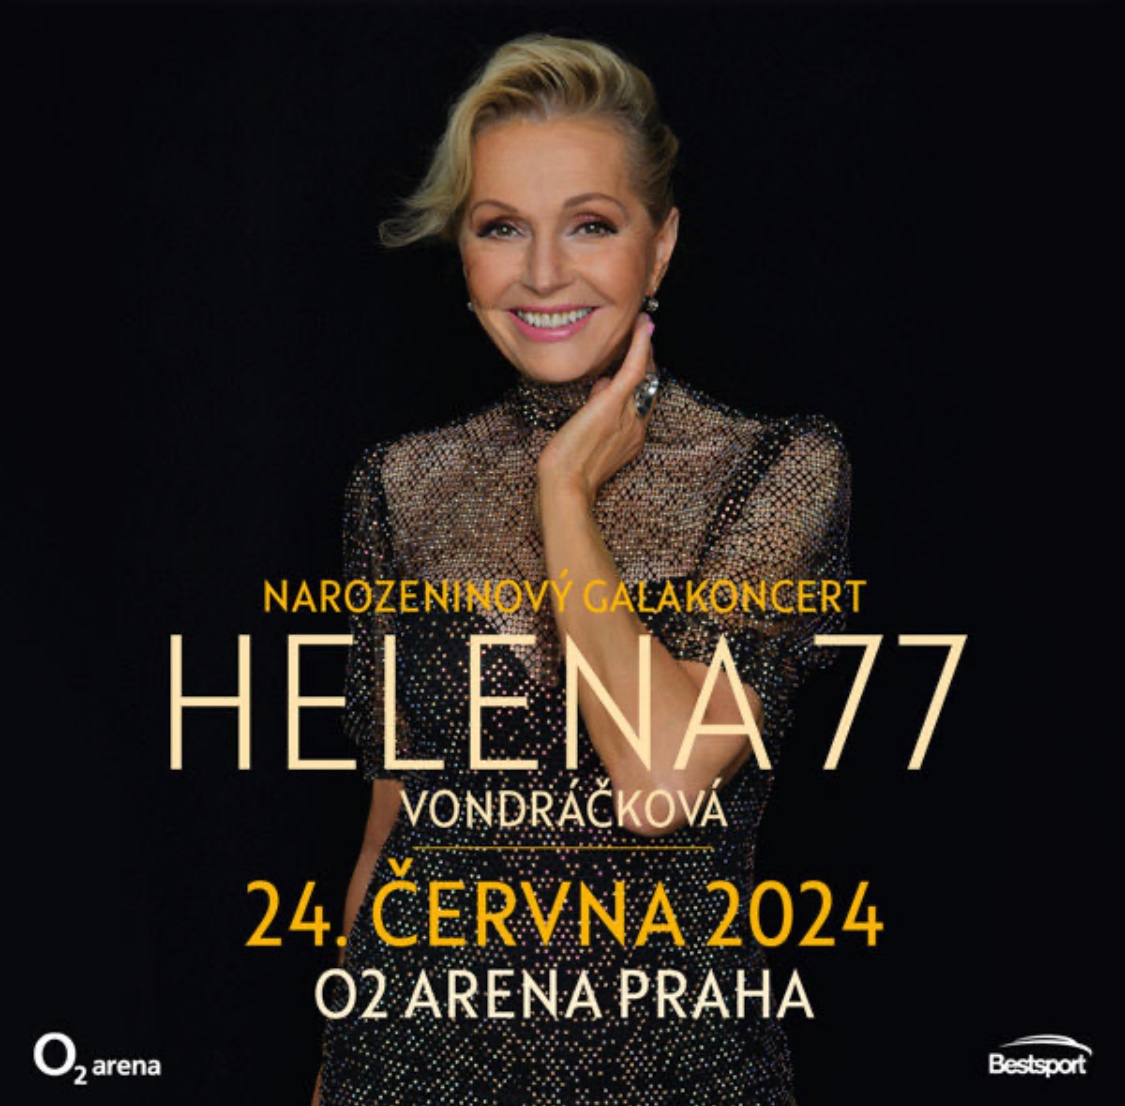 Helena Vondráčková 77